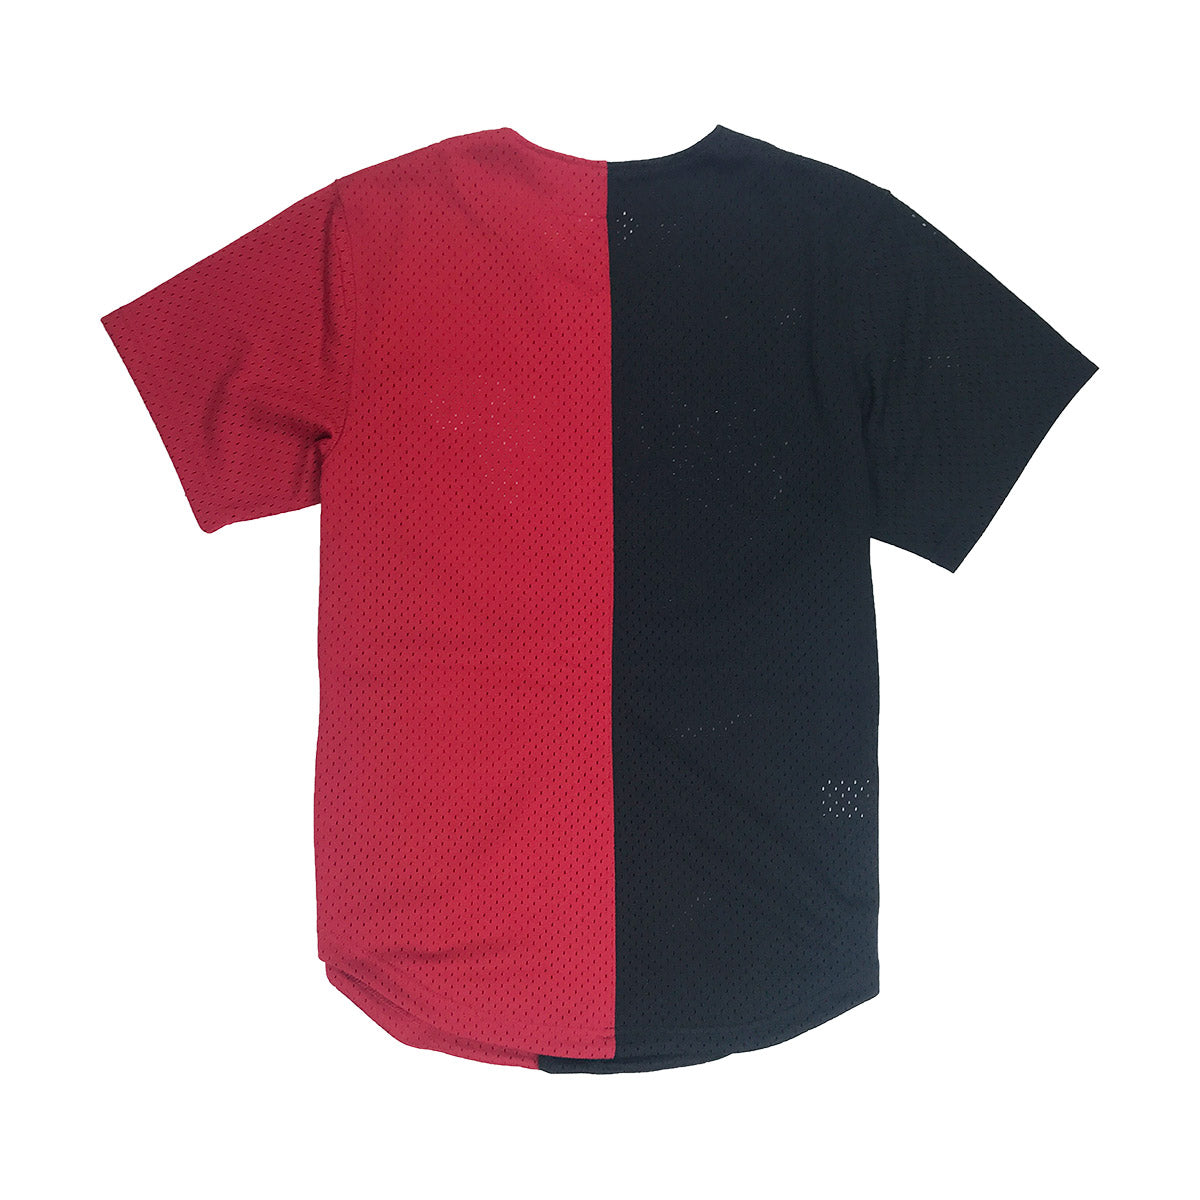 red and black split shirt